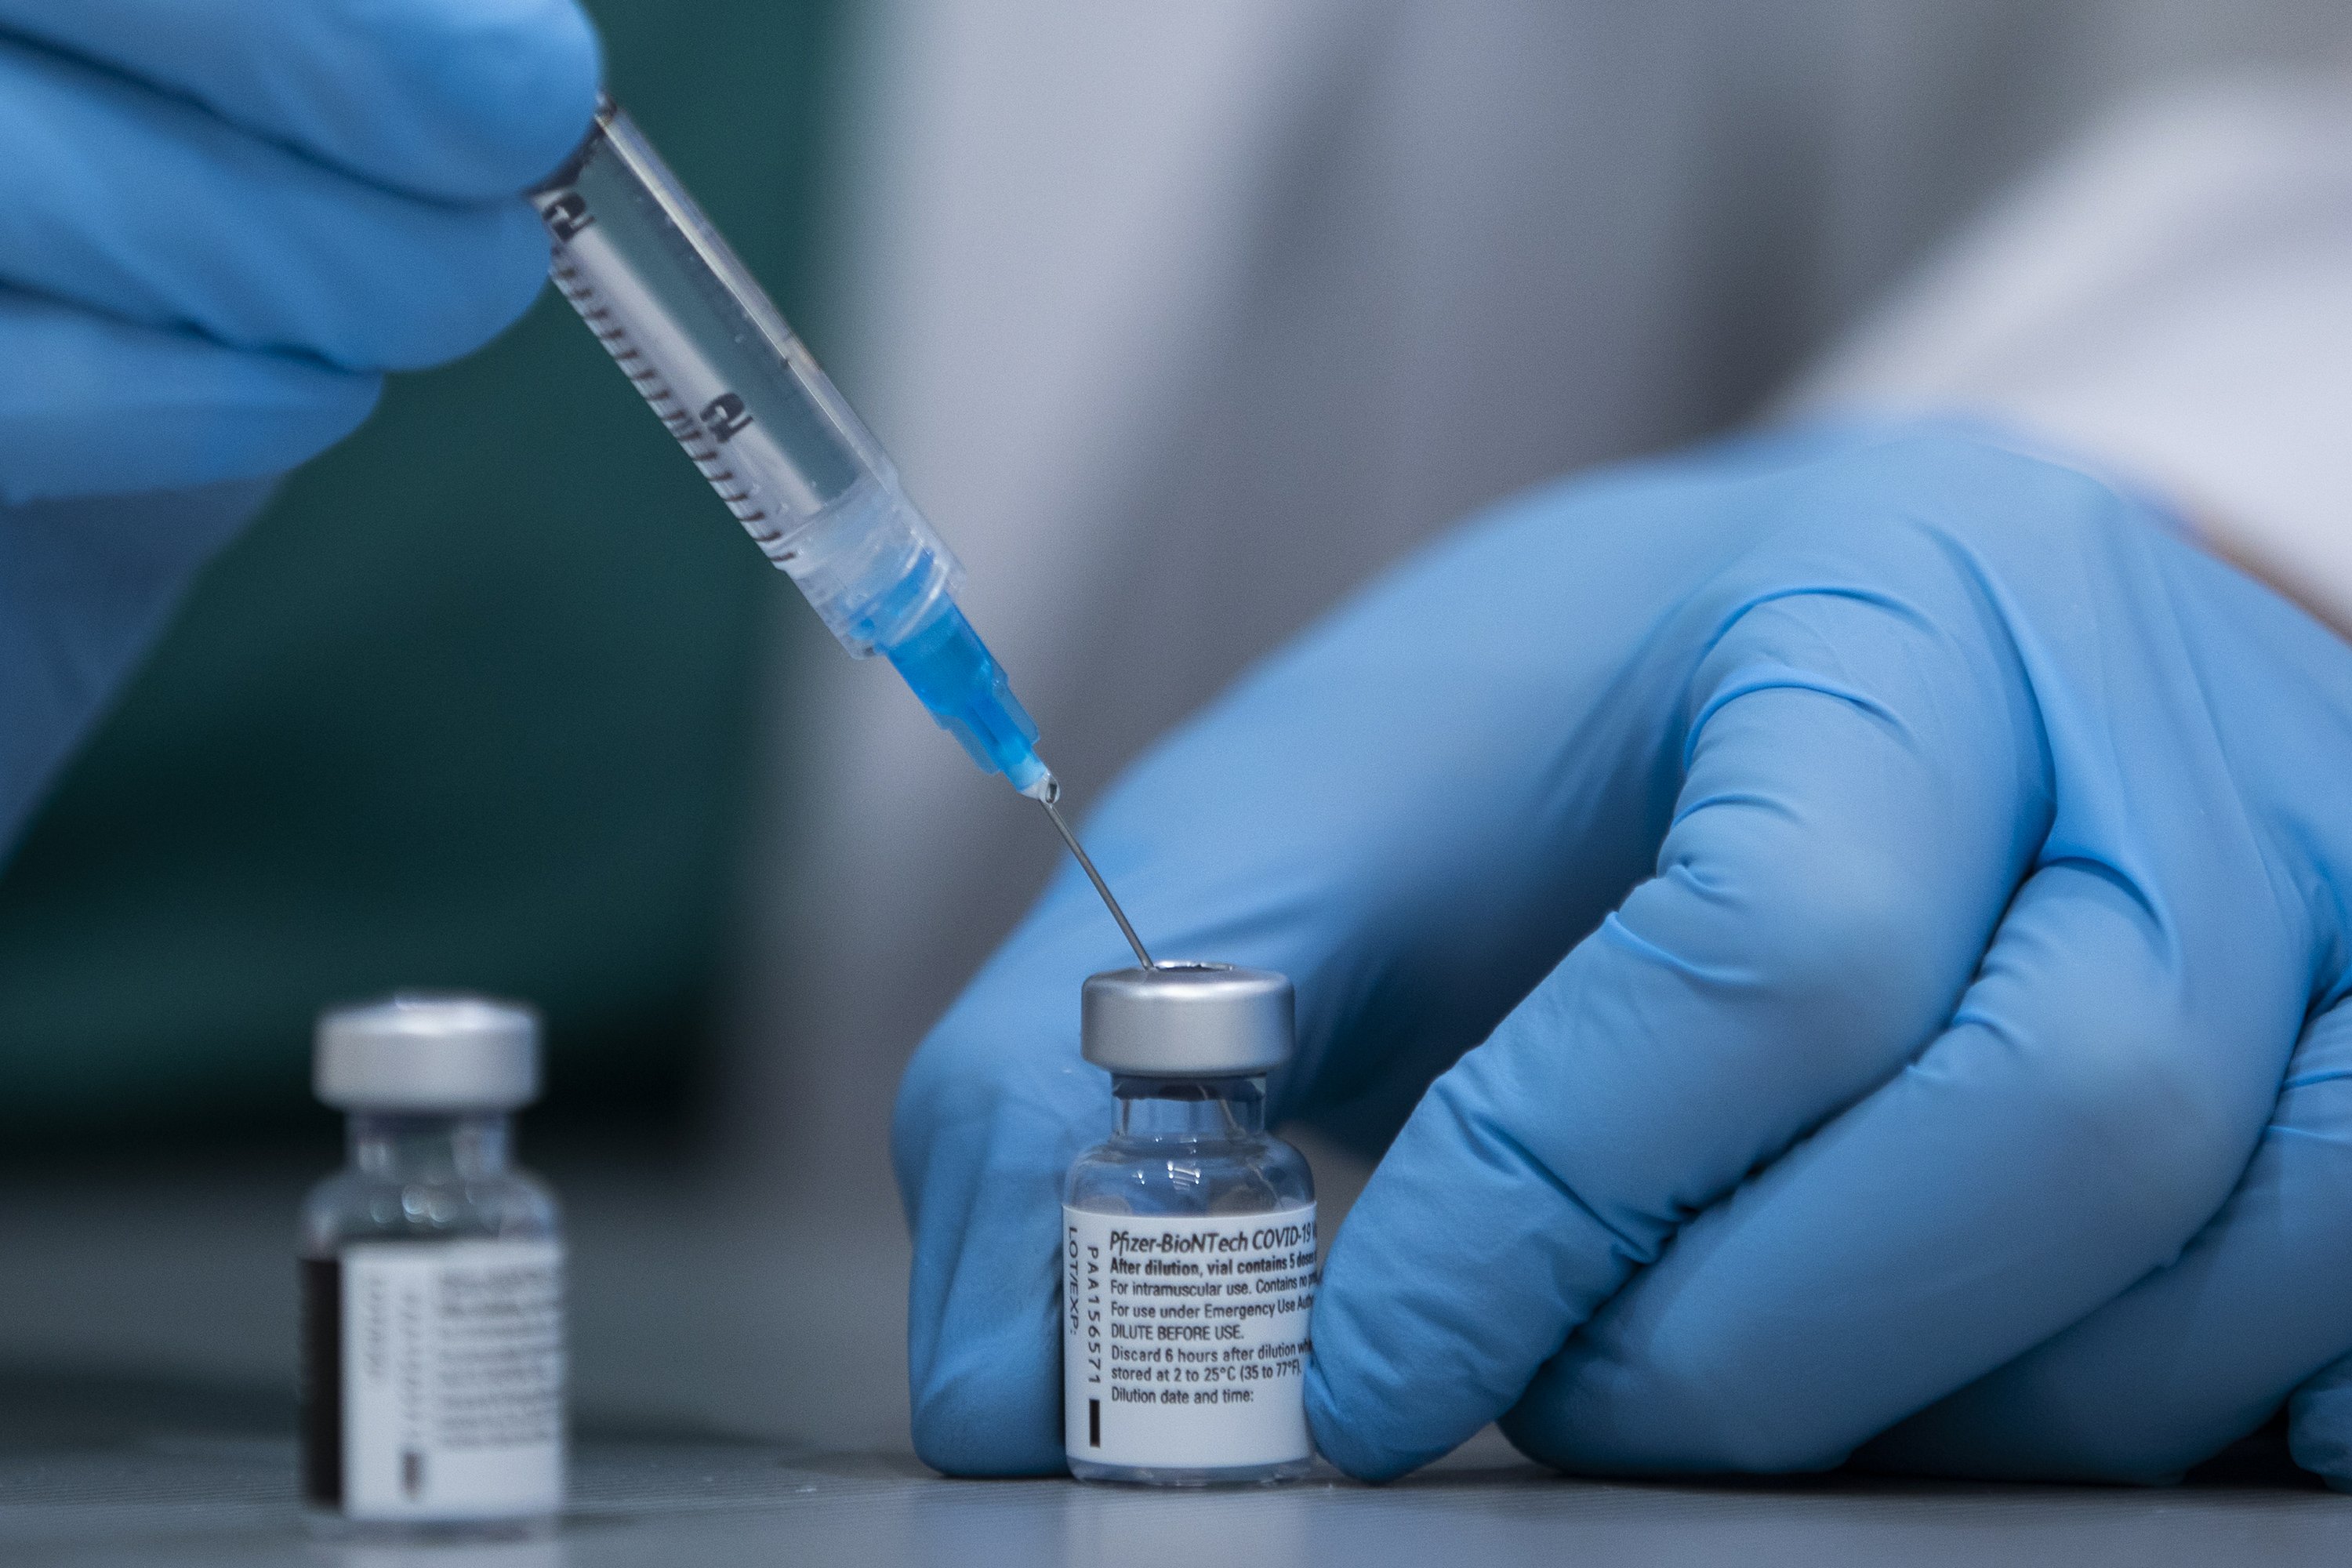 Israel will give Palestinian coronavirus vaccines to Palestinians